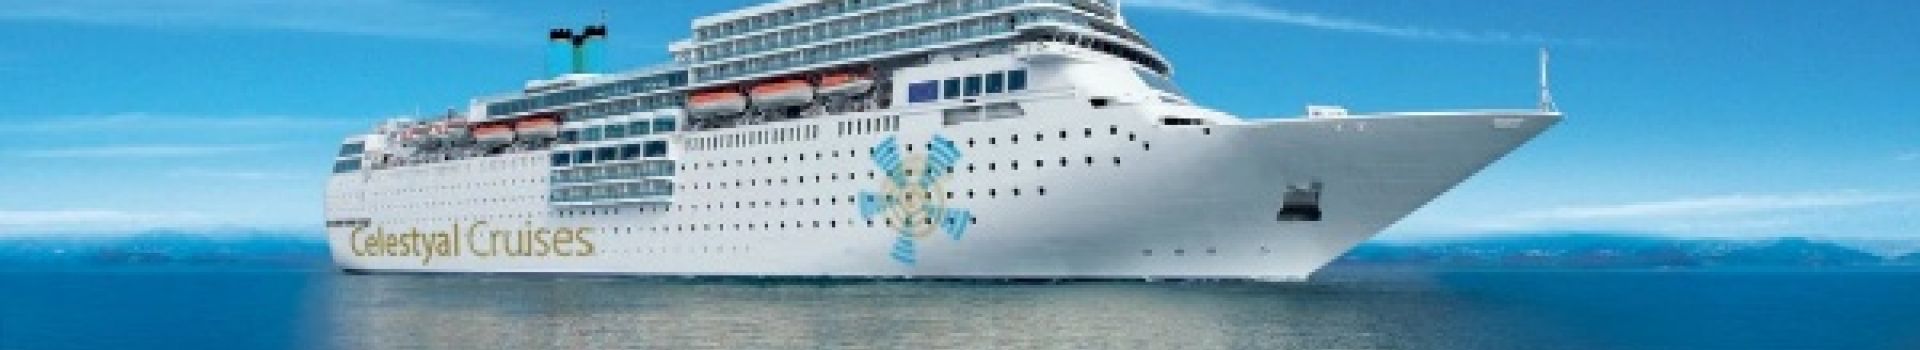 Celestyal Cruises | Cruises Holiday Travel Package | Cassidy Travel